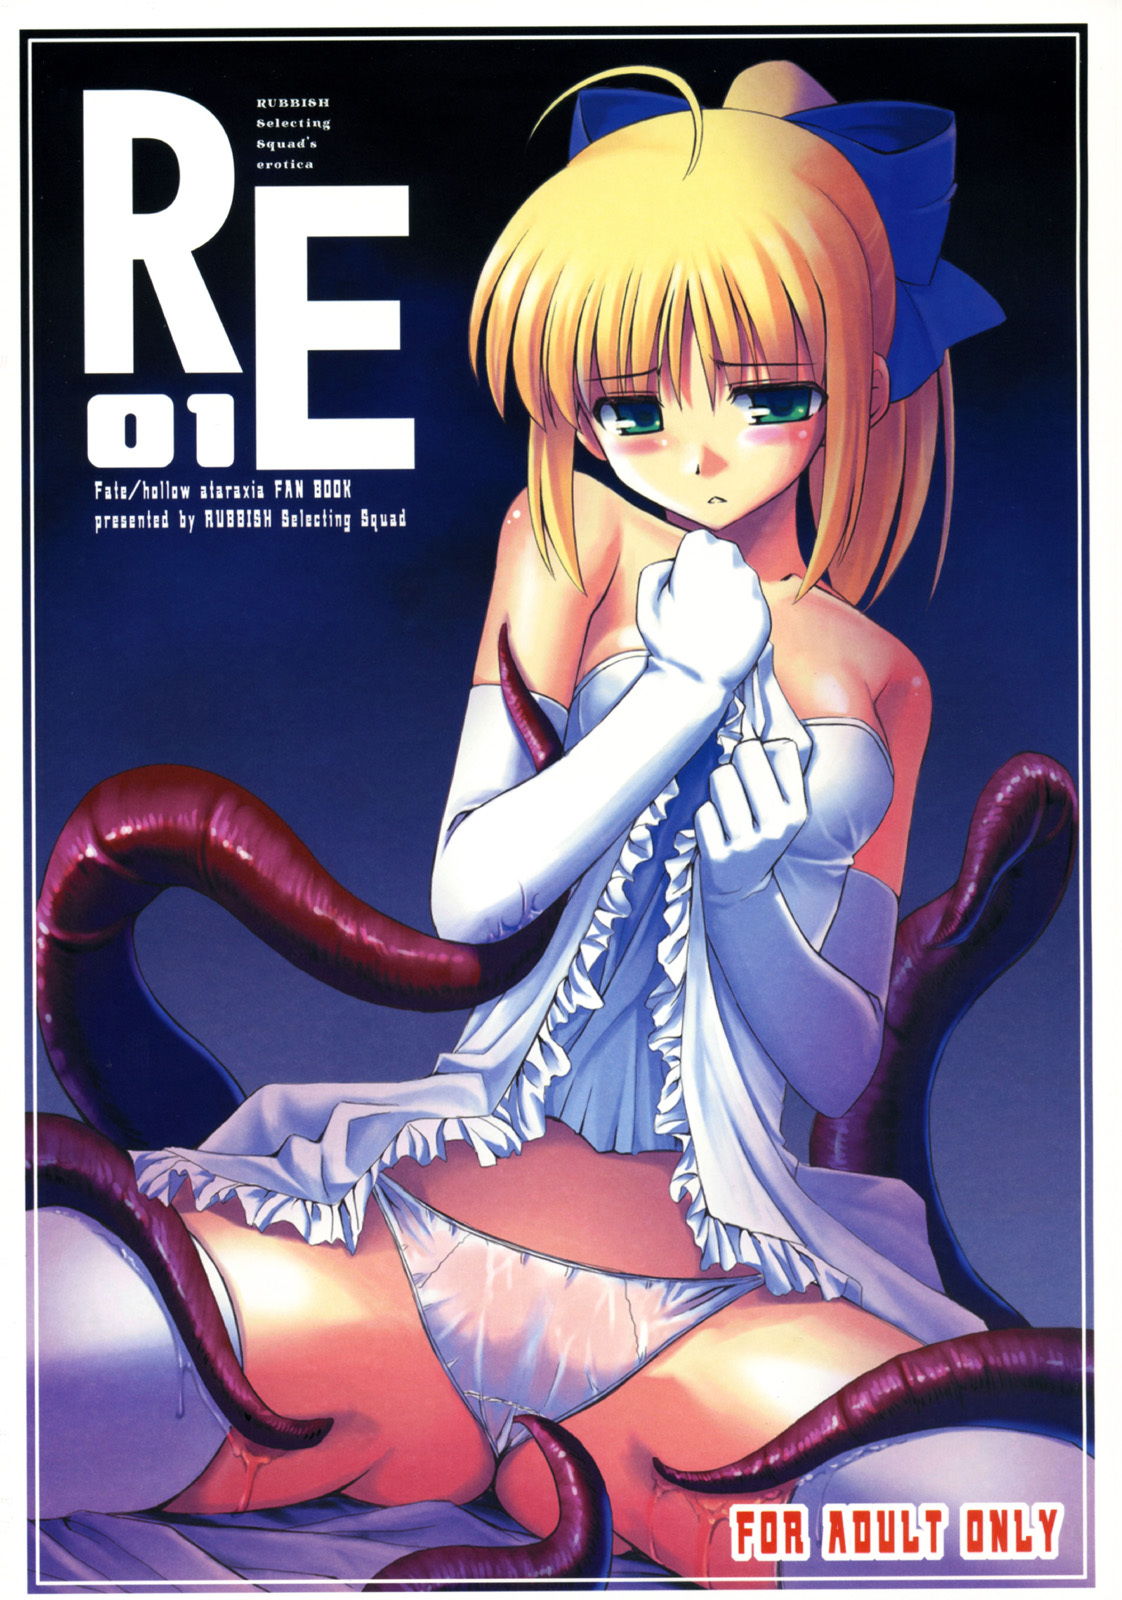 RE 01 fate stay night hentai manga